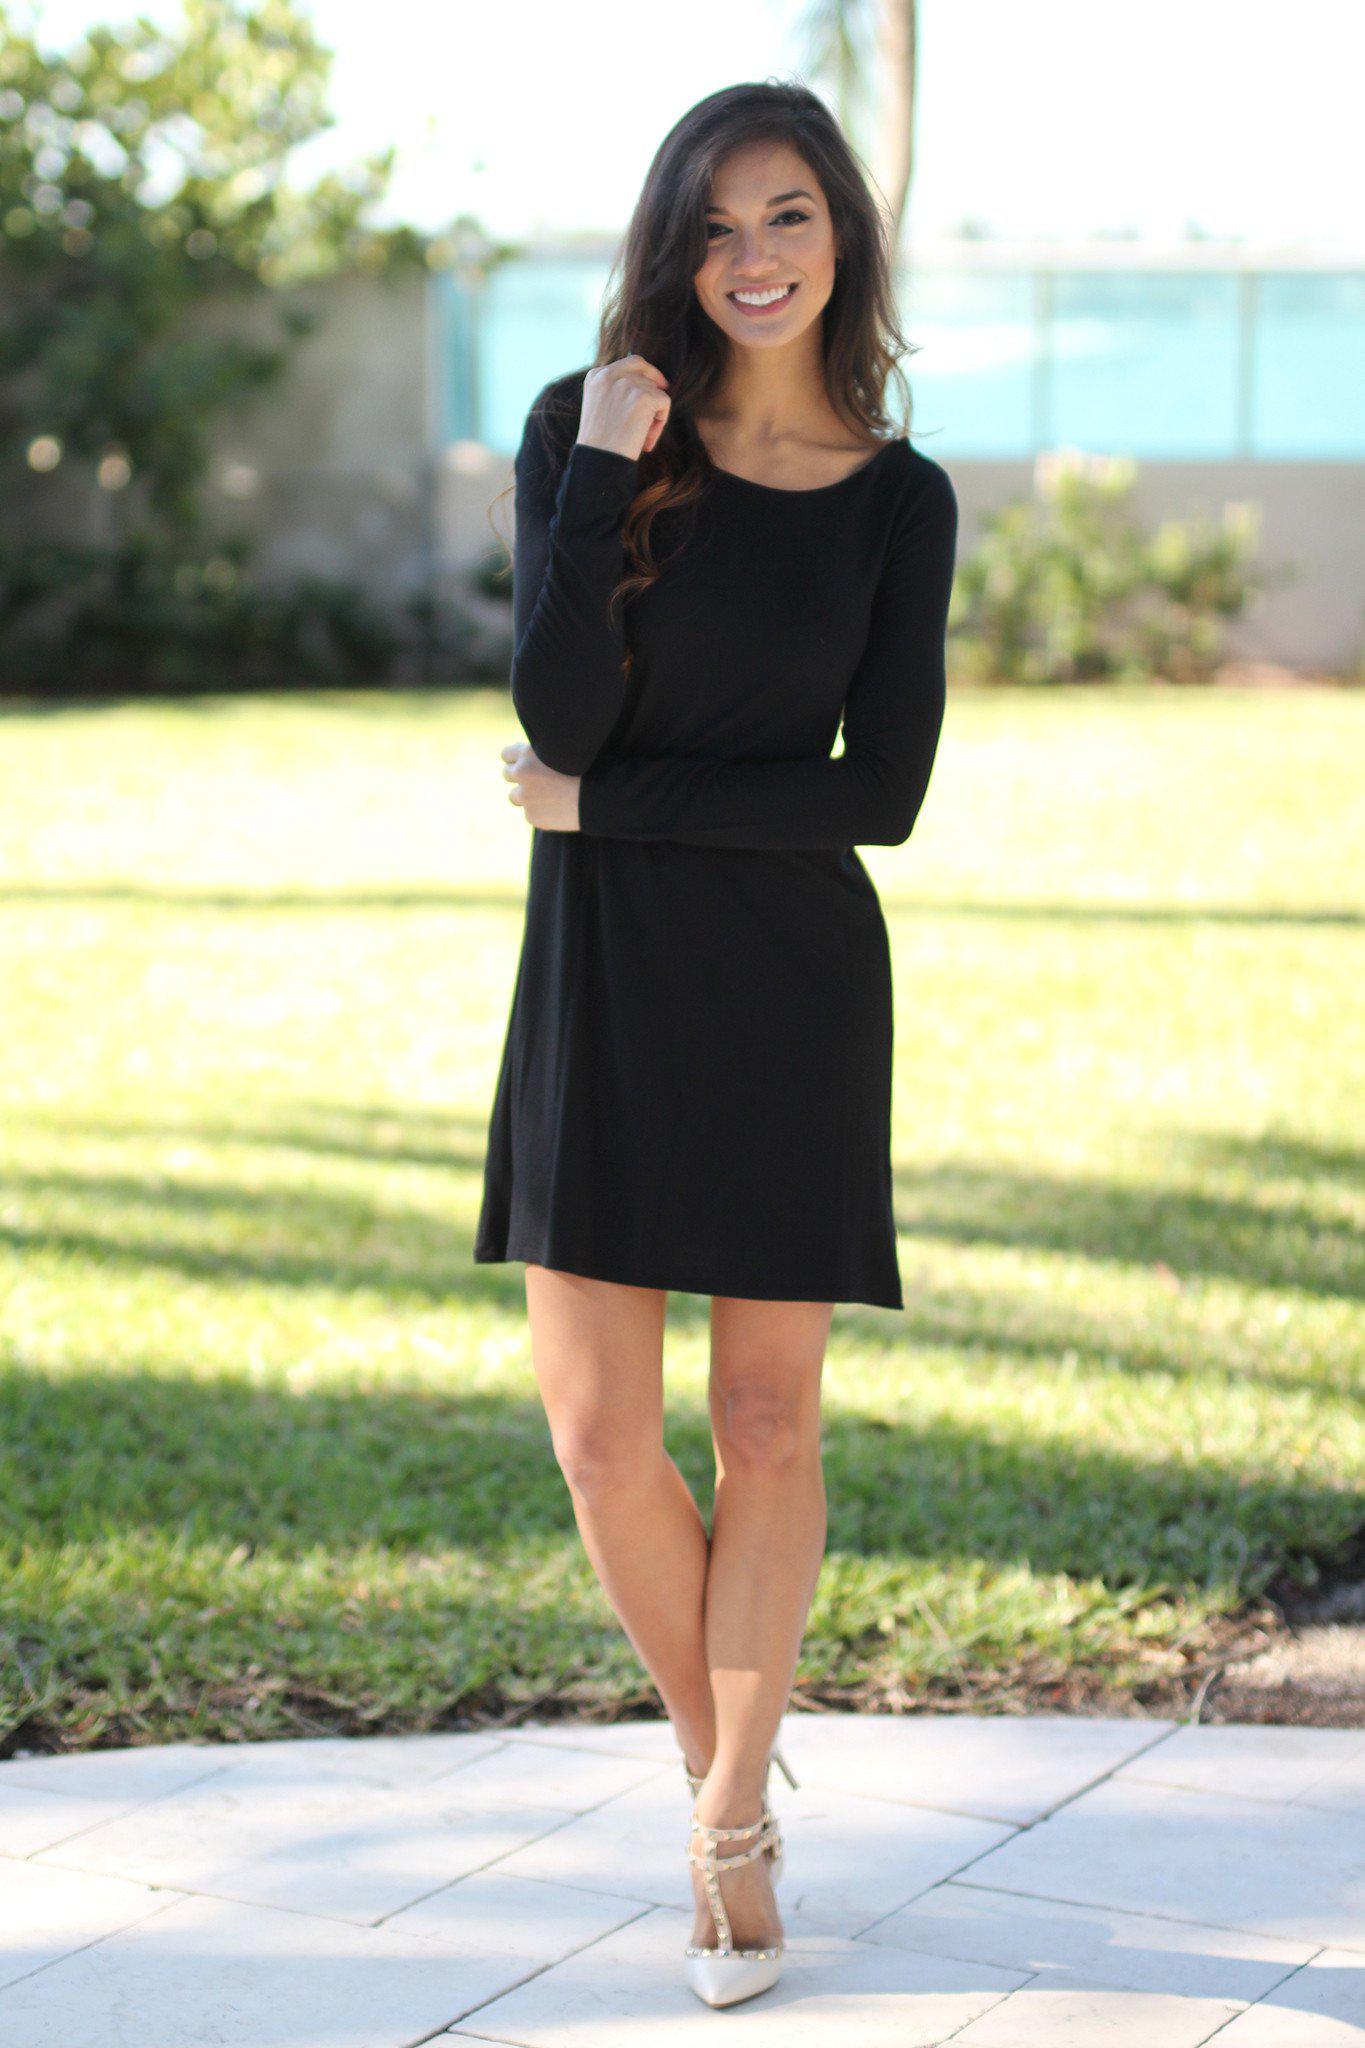 Black Long Sleeve Tunic Dress